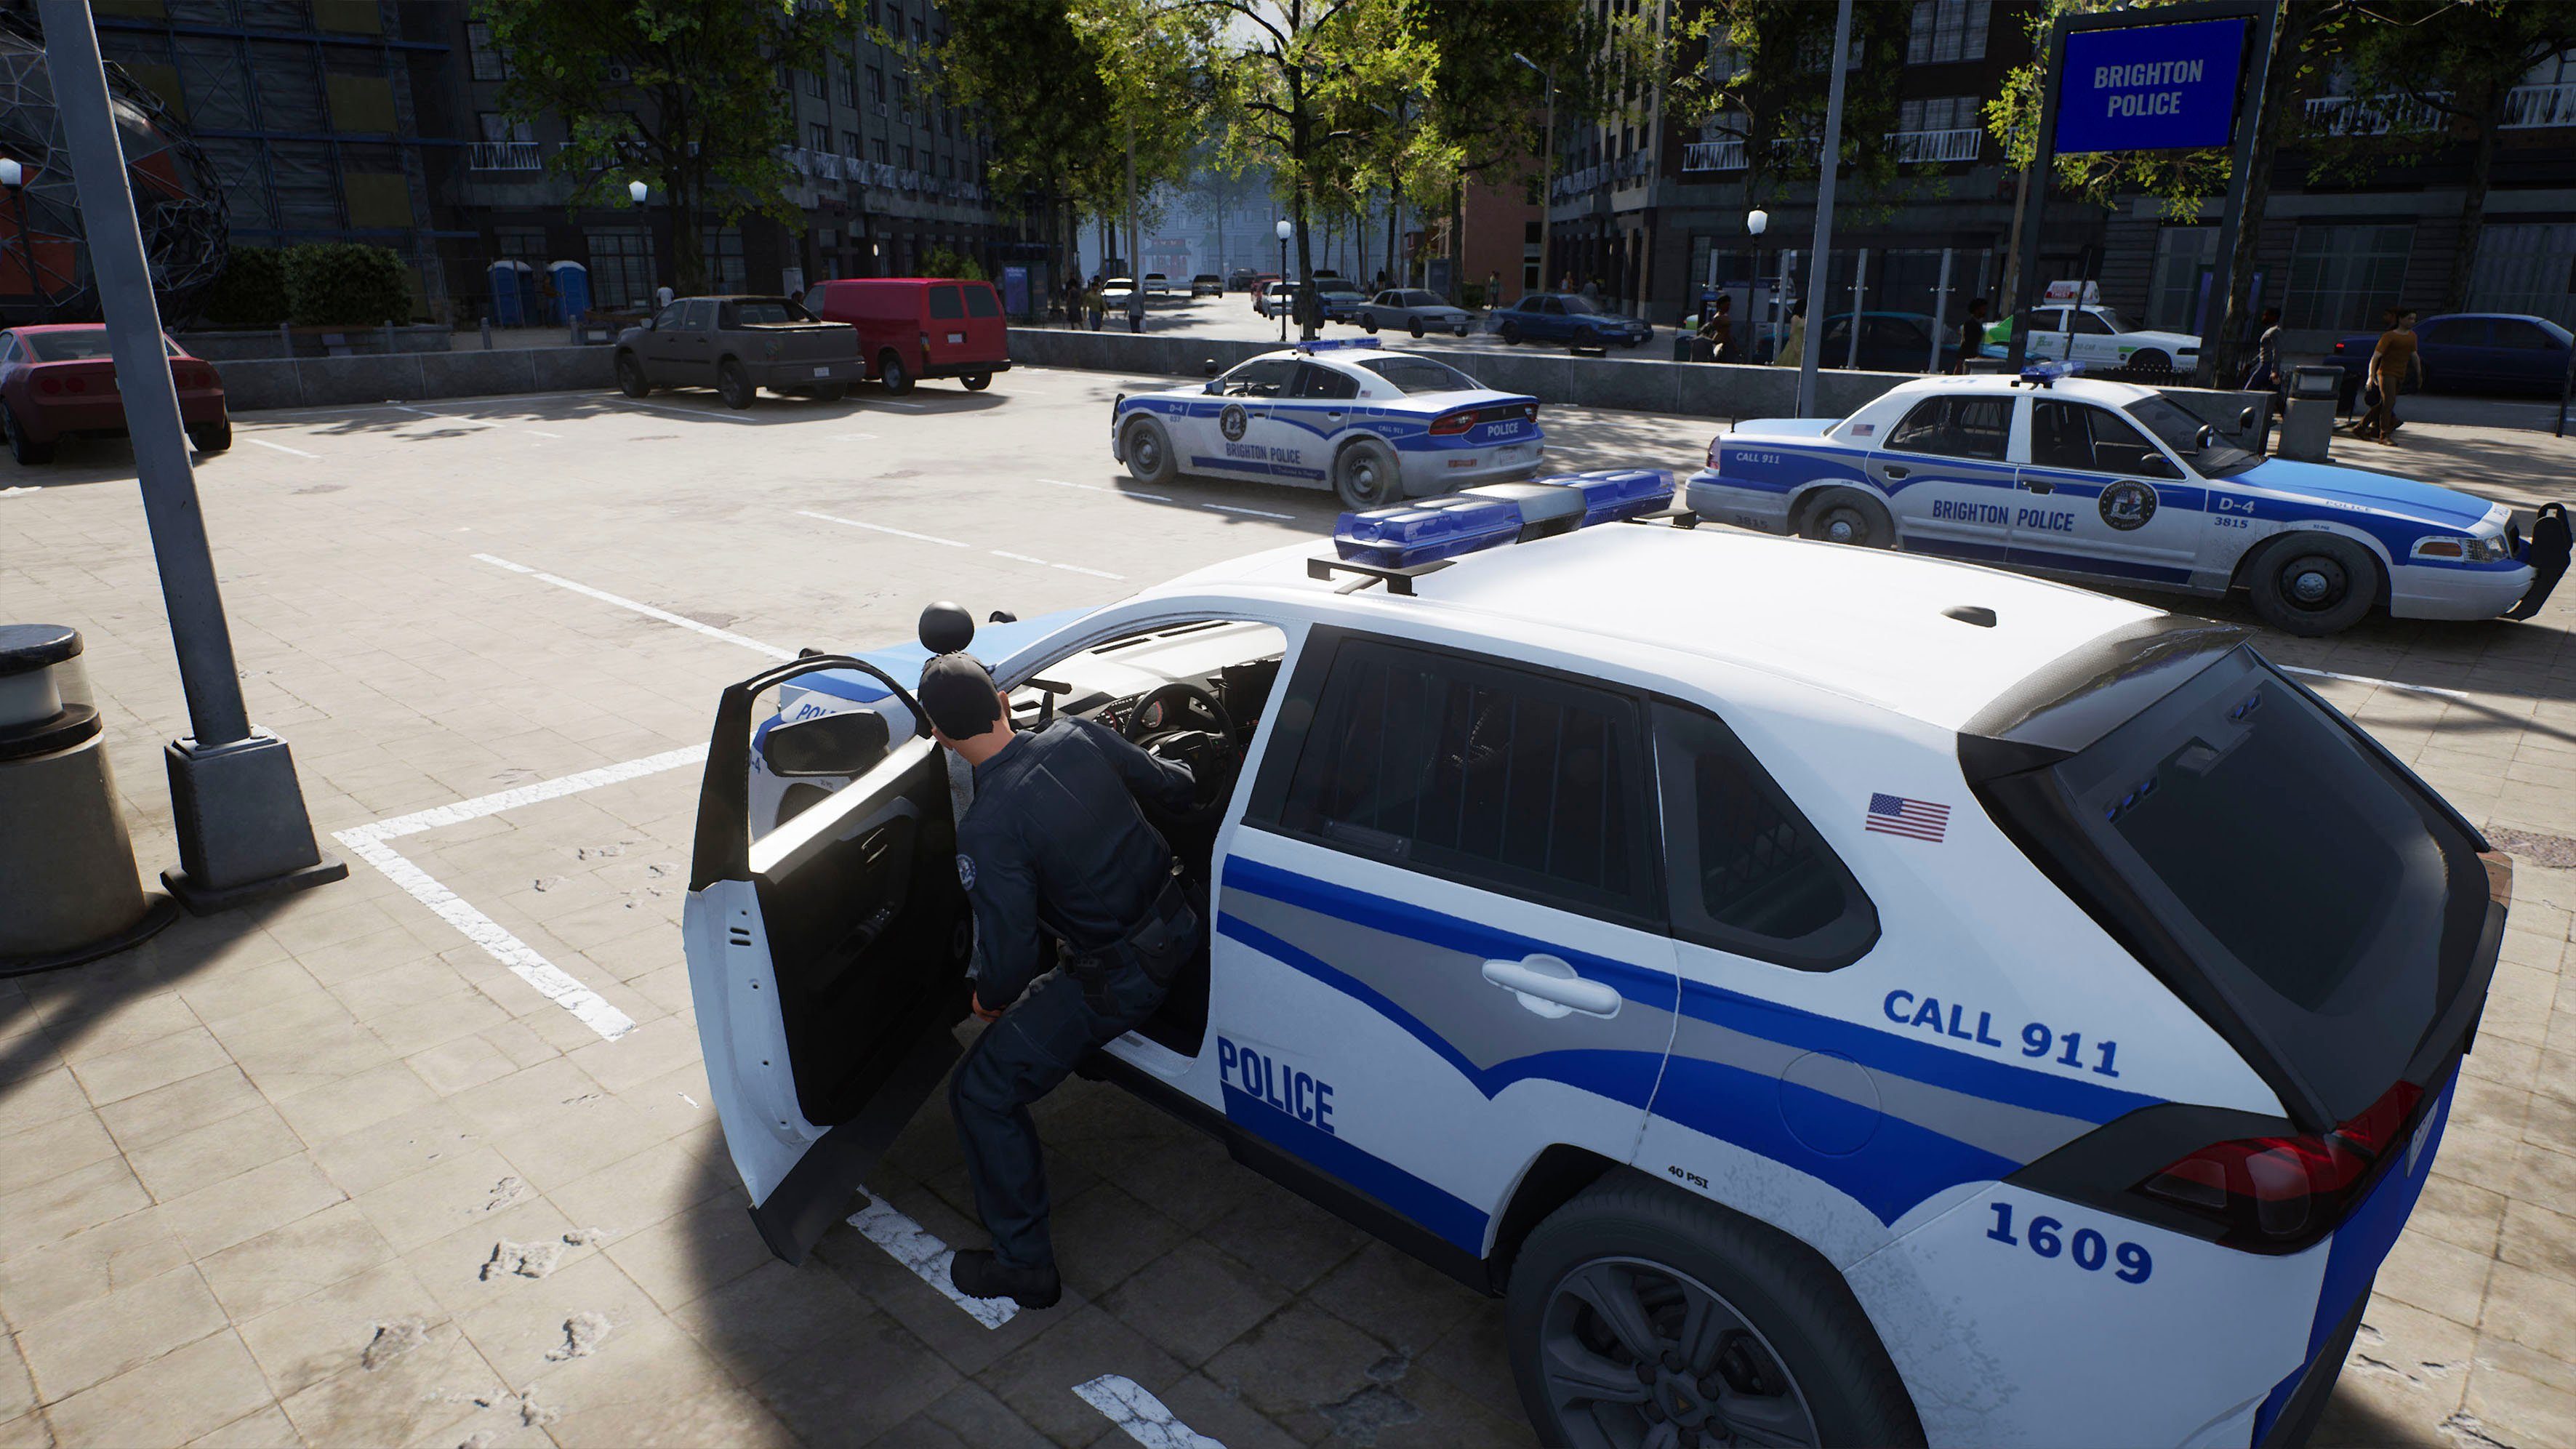 Astragon Police PlayStation Patrol 4 Officers Simulator